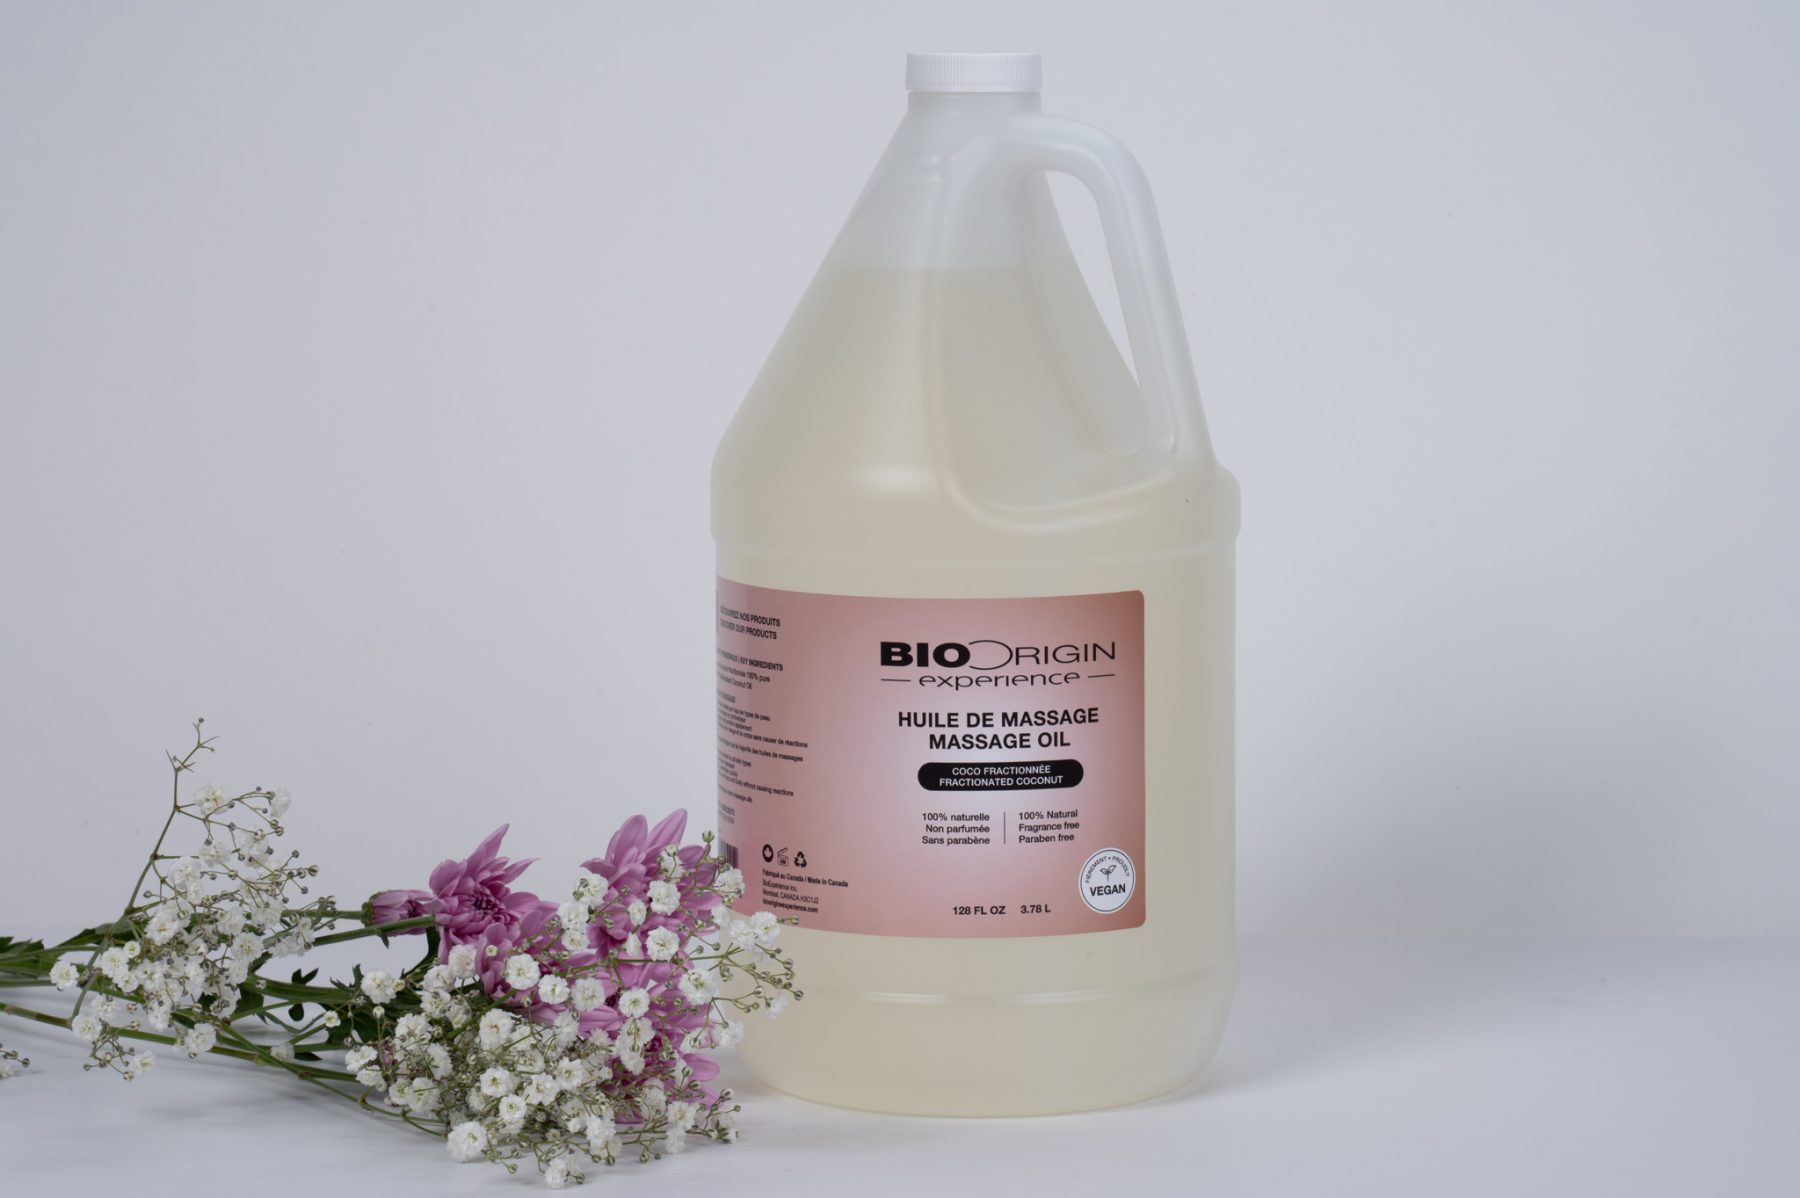 BioOrigin Experience Massage oil with flowers